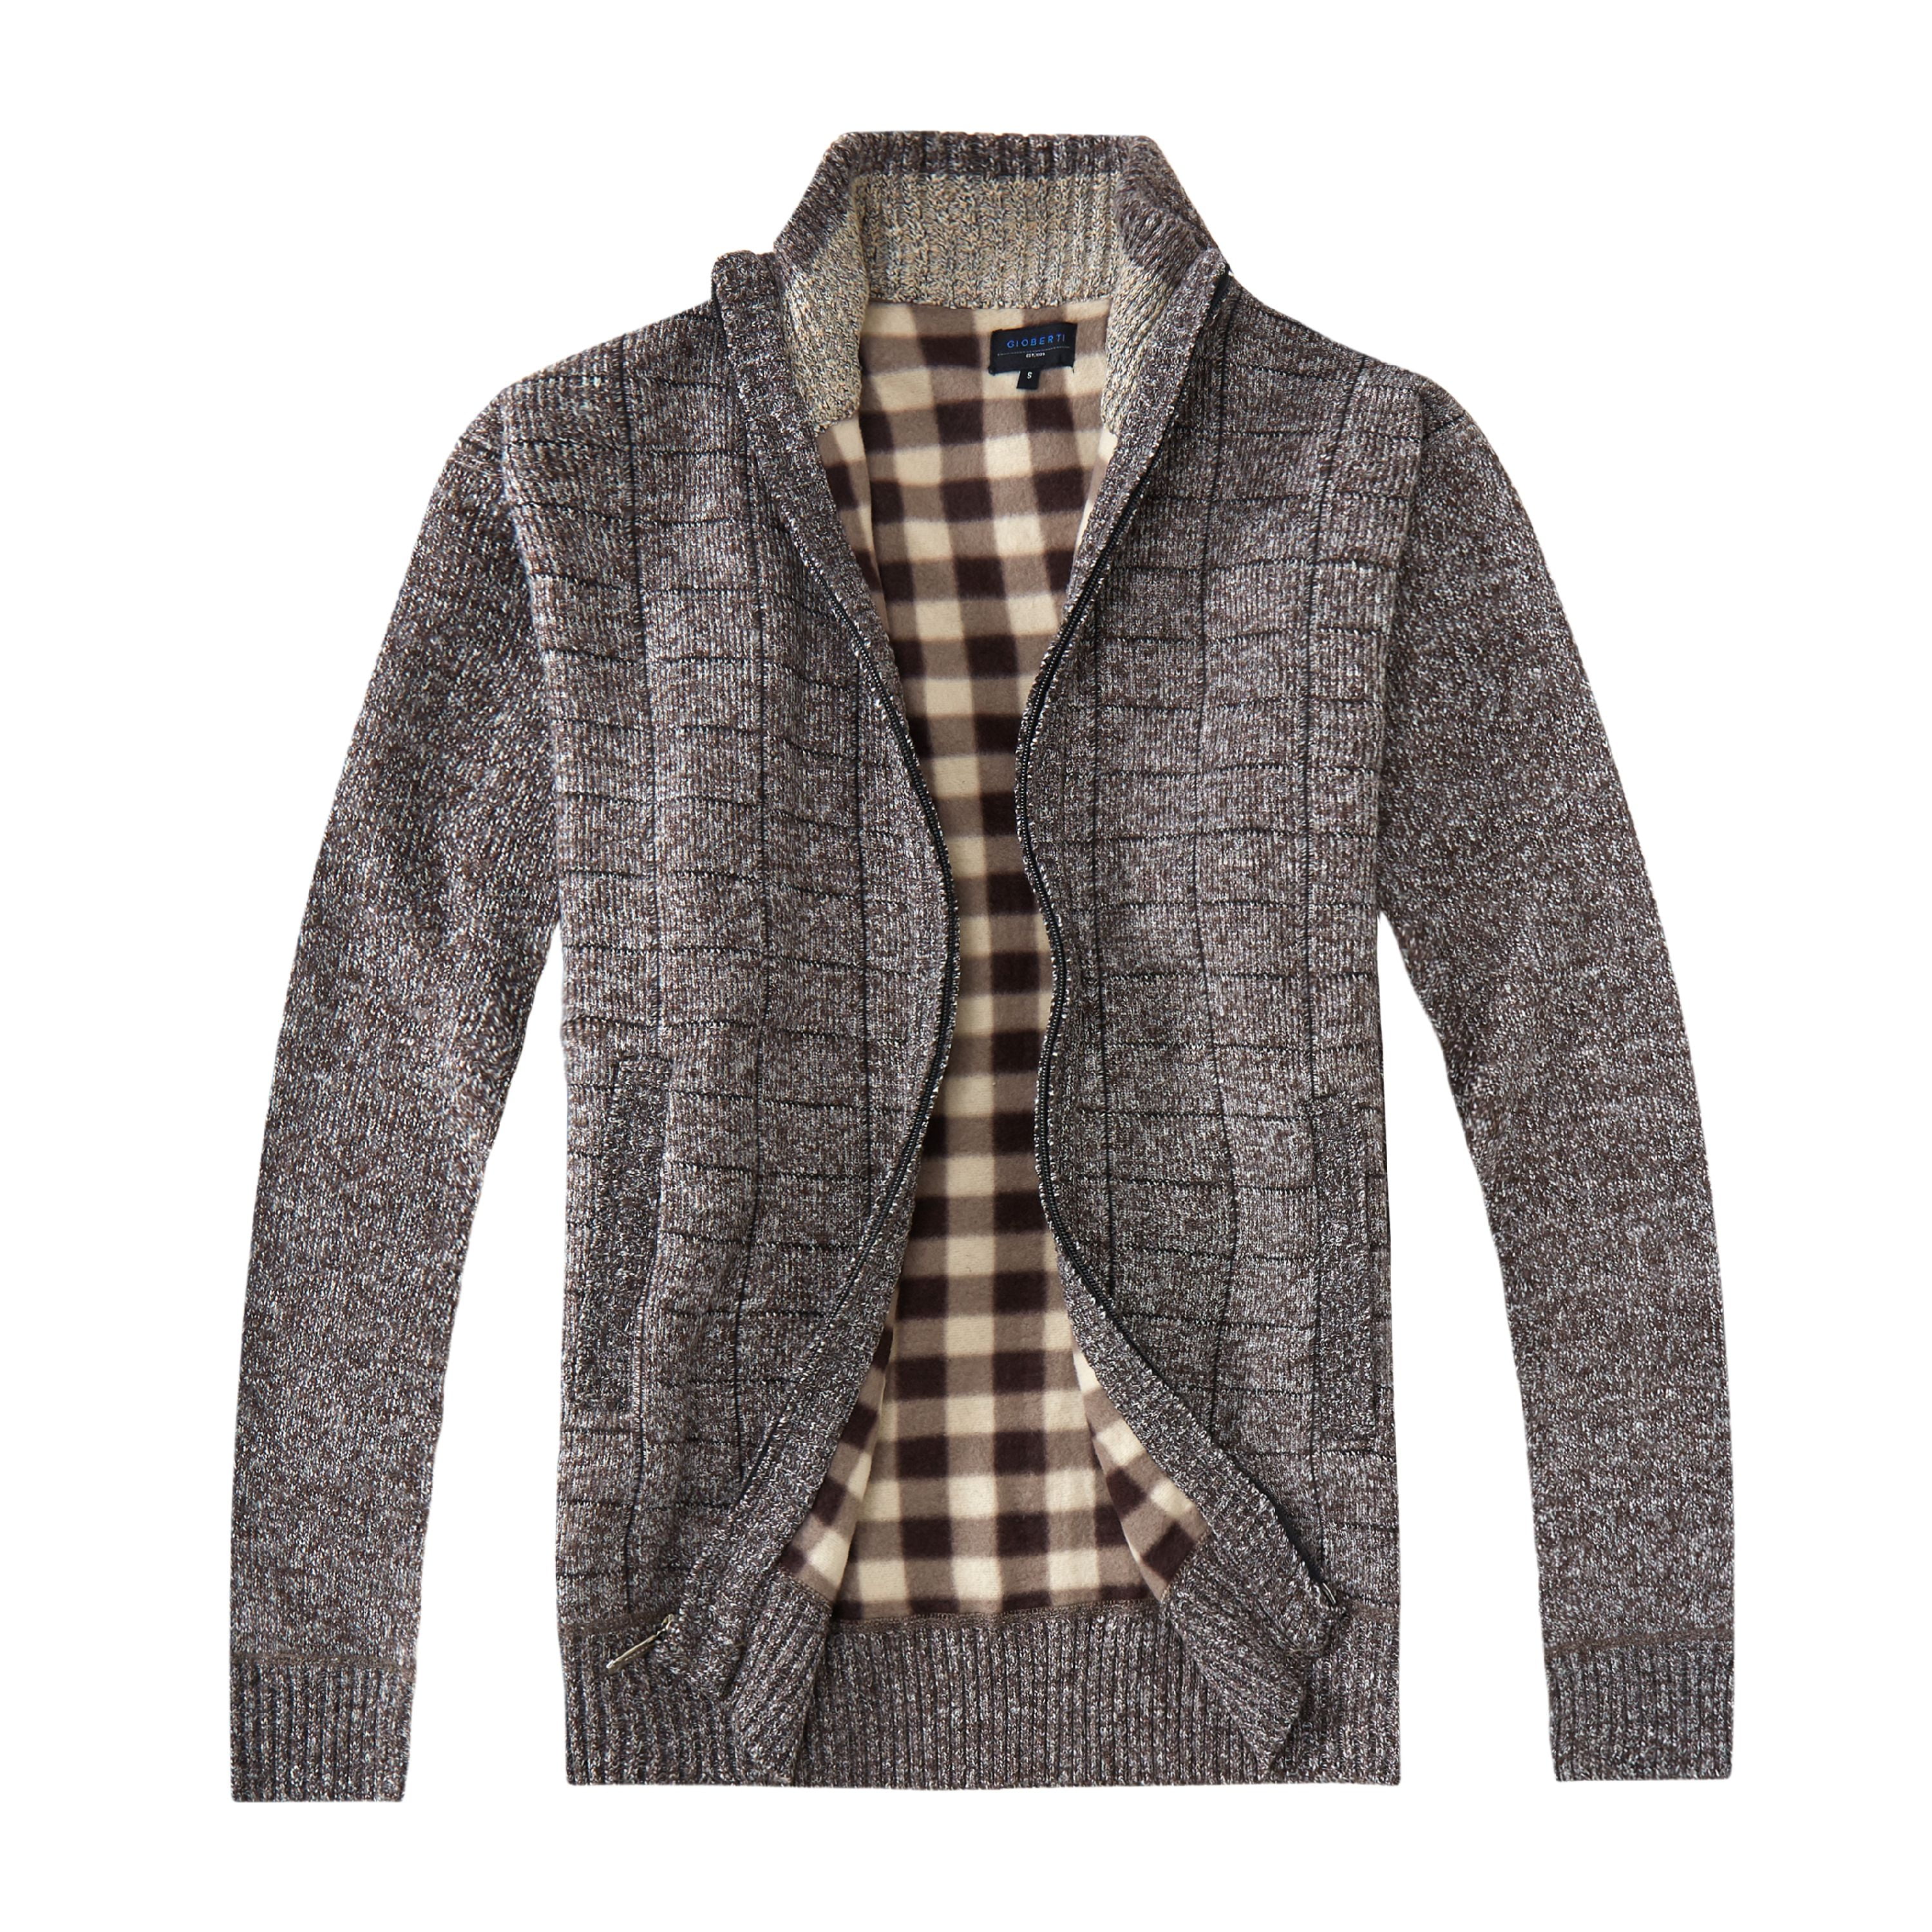 Gioberti Men's Knitted Regular Fit Full Zip Cardigan Sweater with Soft ...